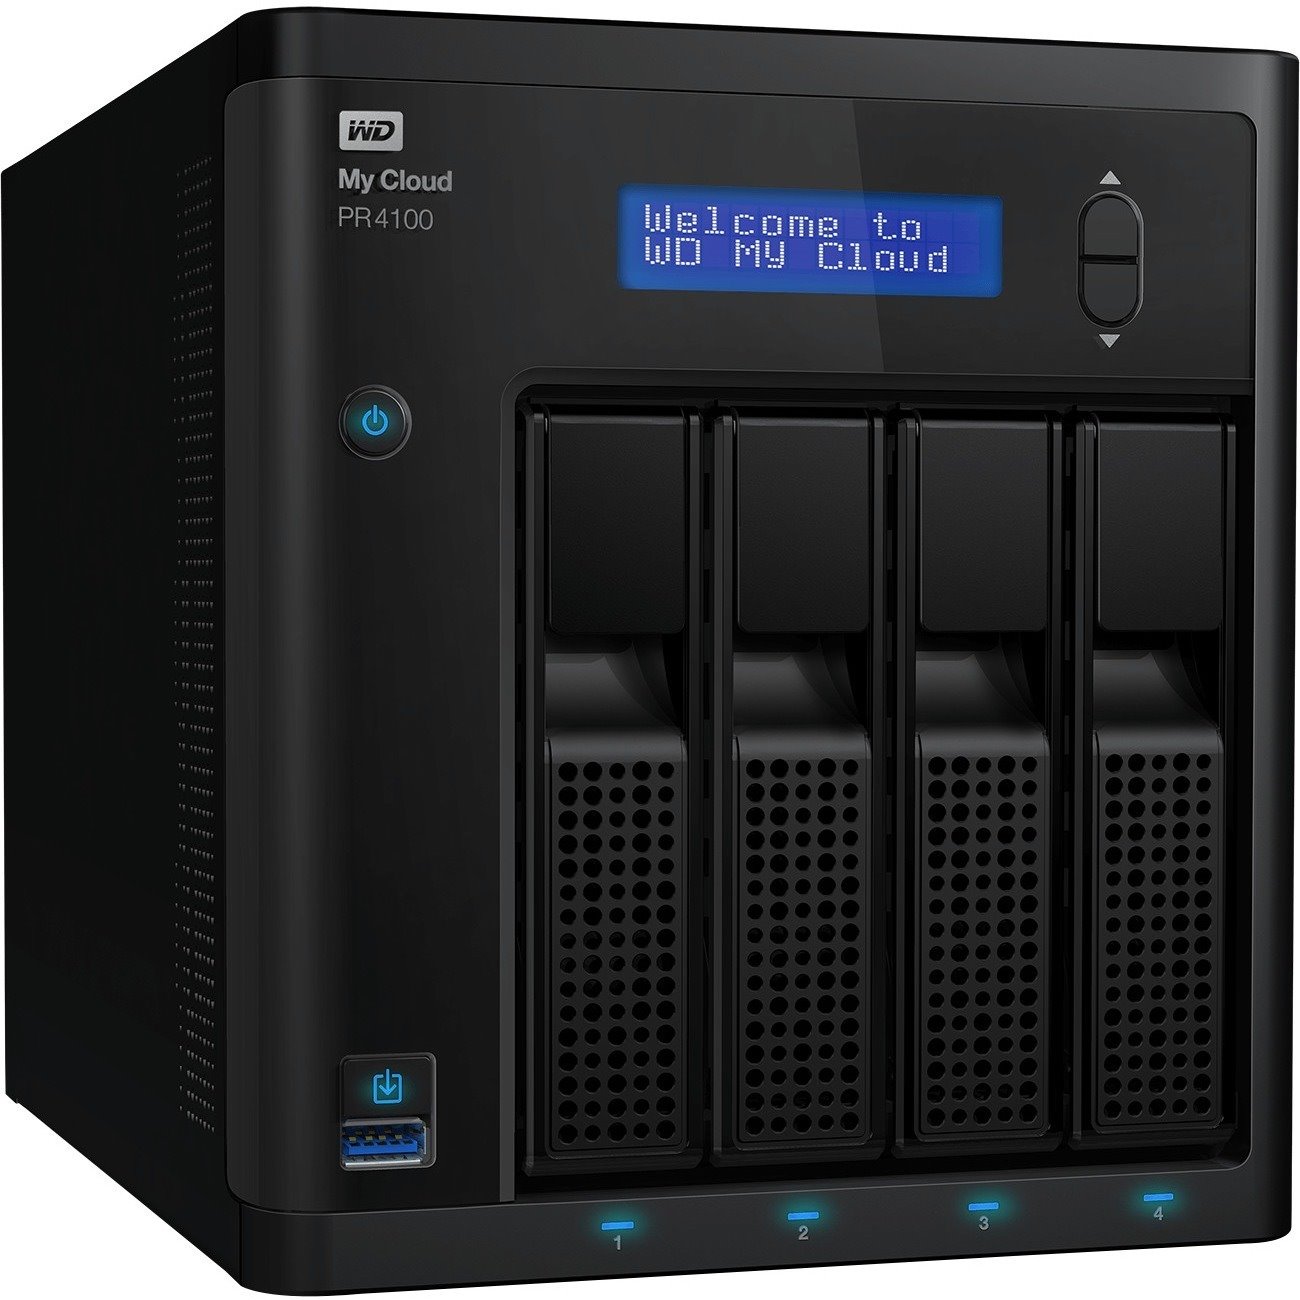 WD My Cloud Pro PR4100 4 x Total Bays NAS Storage System - Intel Pentium N3710 Quad-core (4 Core) 1.60 GHz - 4 GB RAM Desktop